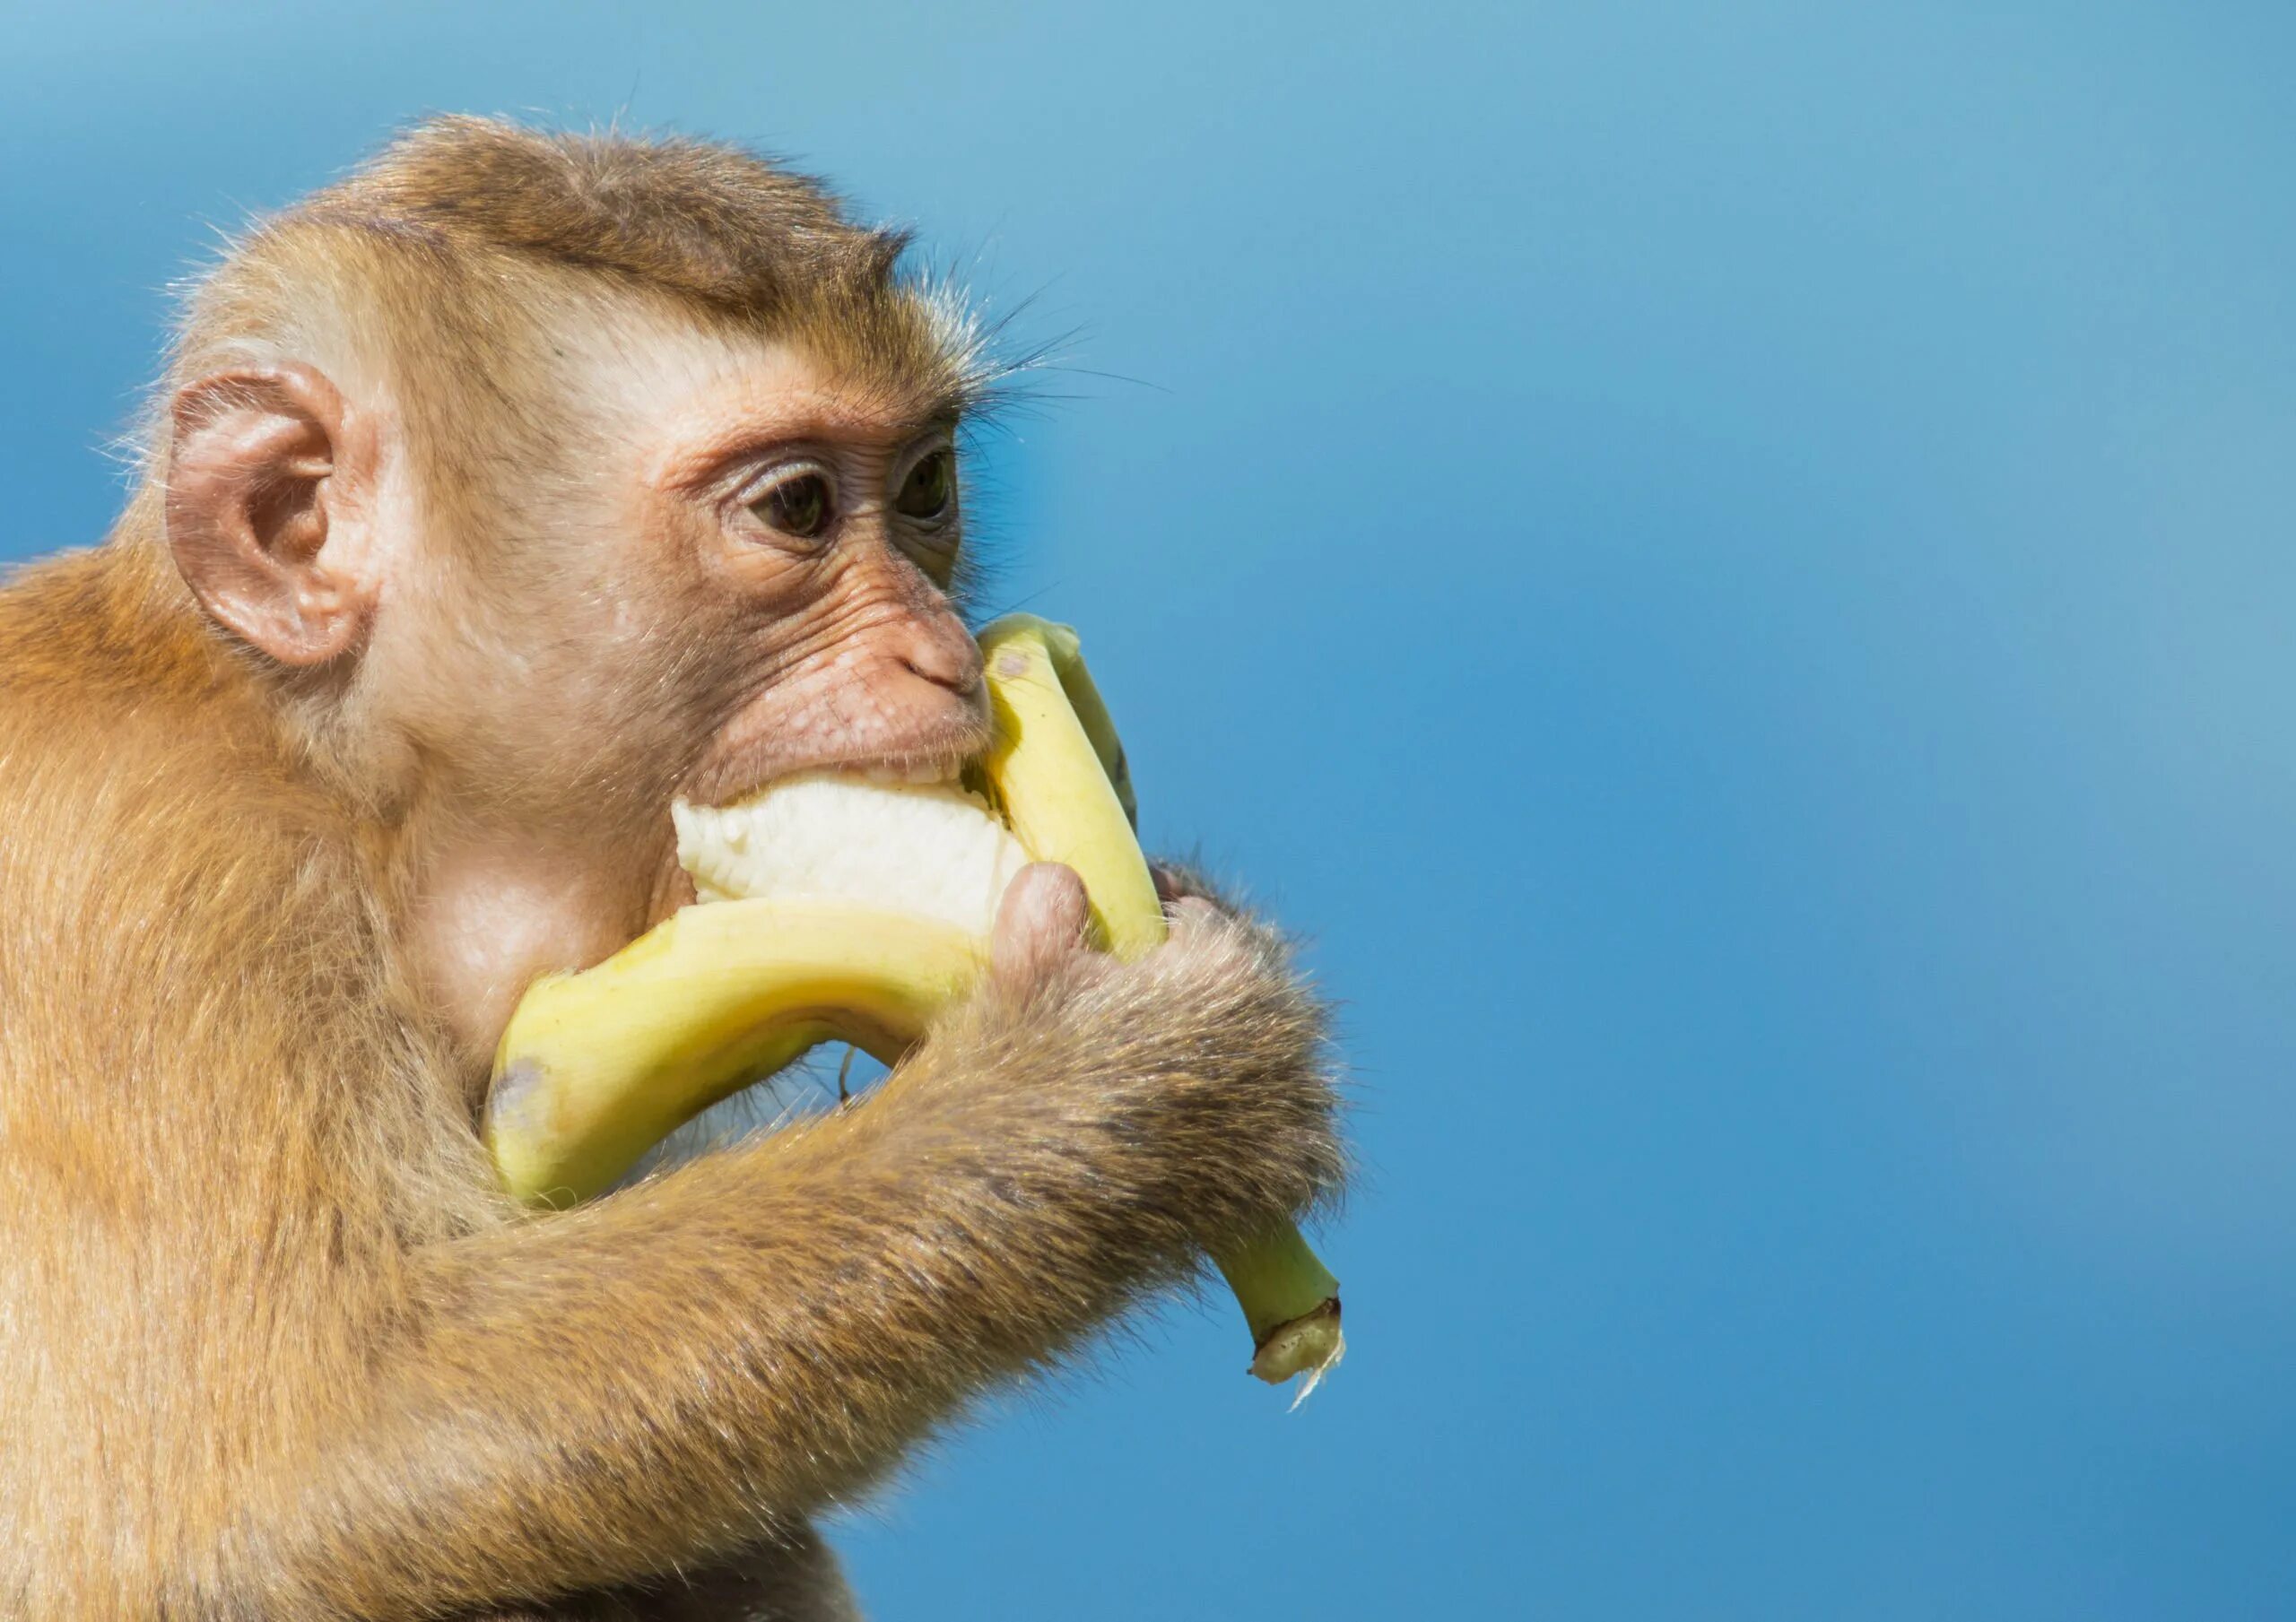 Макака с бананом. Обезьяна кушает банан. J,tpmzyf c ,fuyfyfvb. Фото обезьяны с бананом. Обезьяны любят бананы